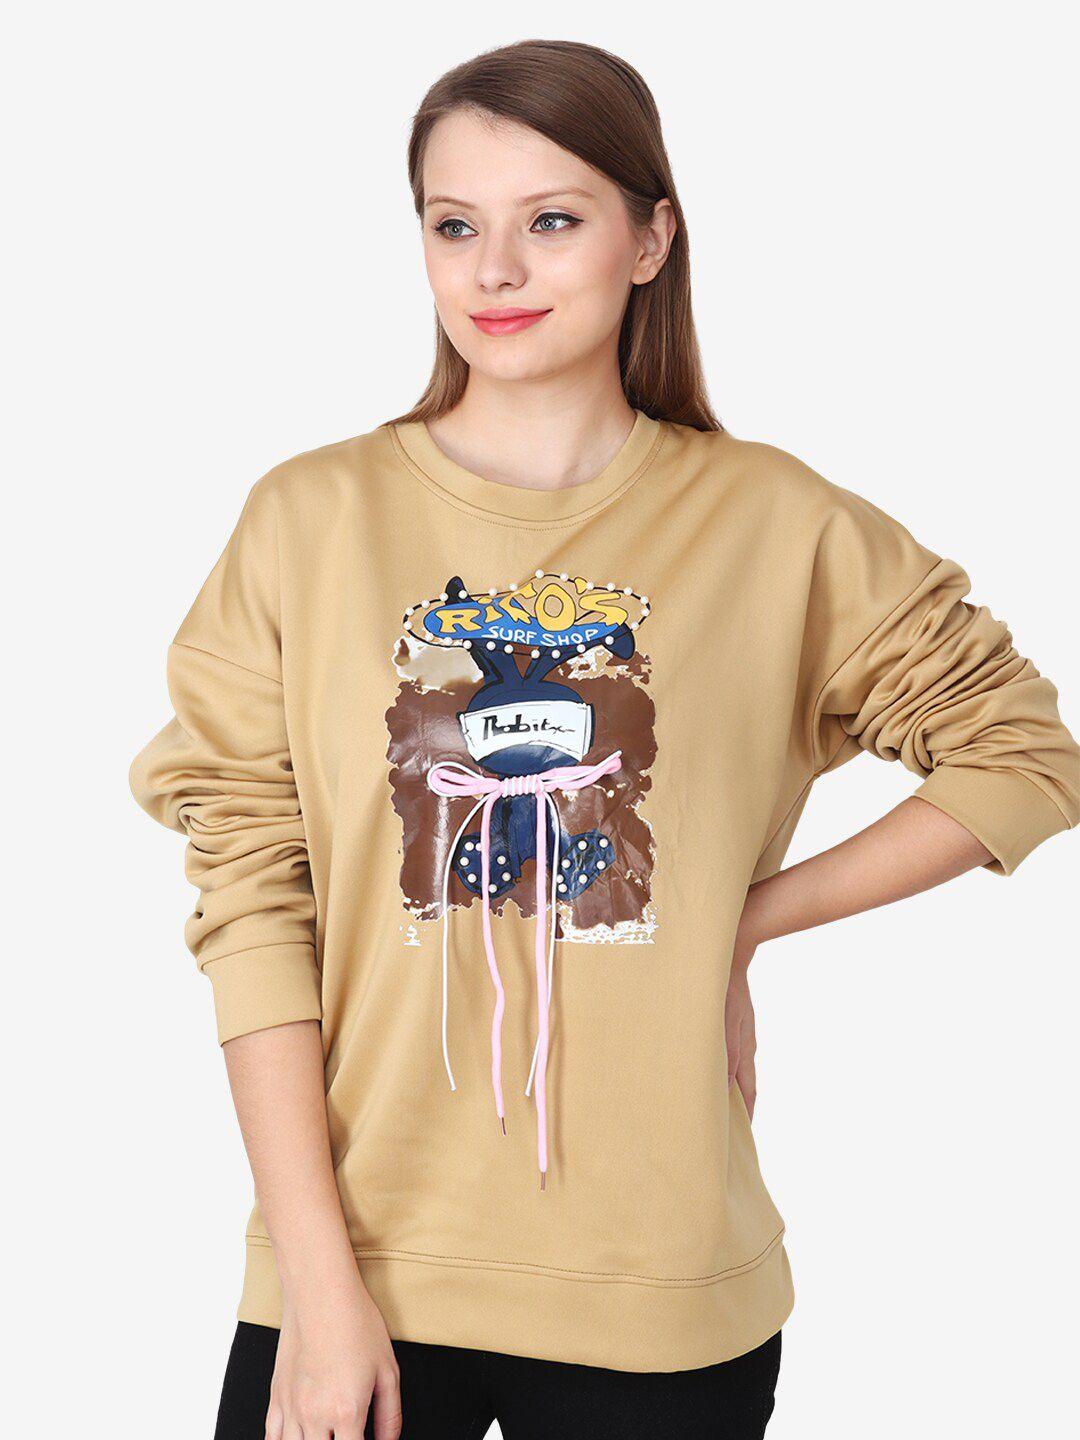 albion graphic printed woolen sweatshirt